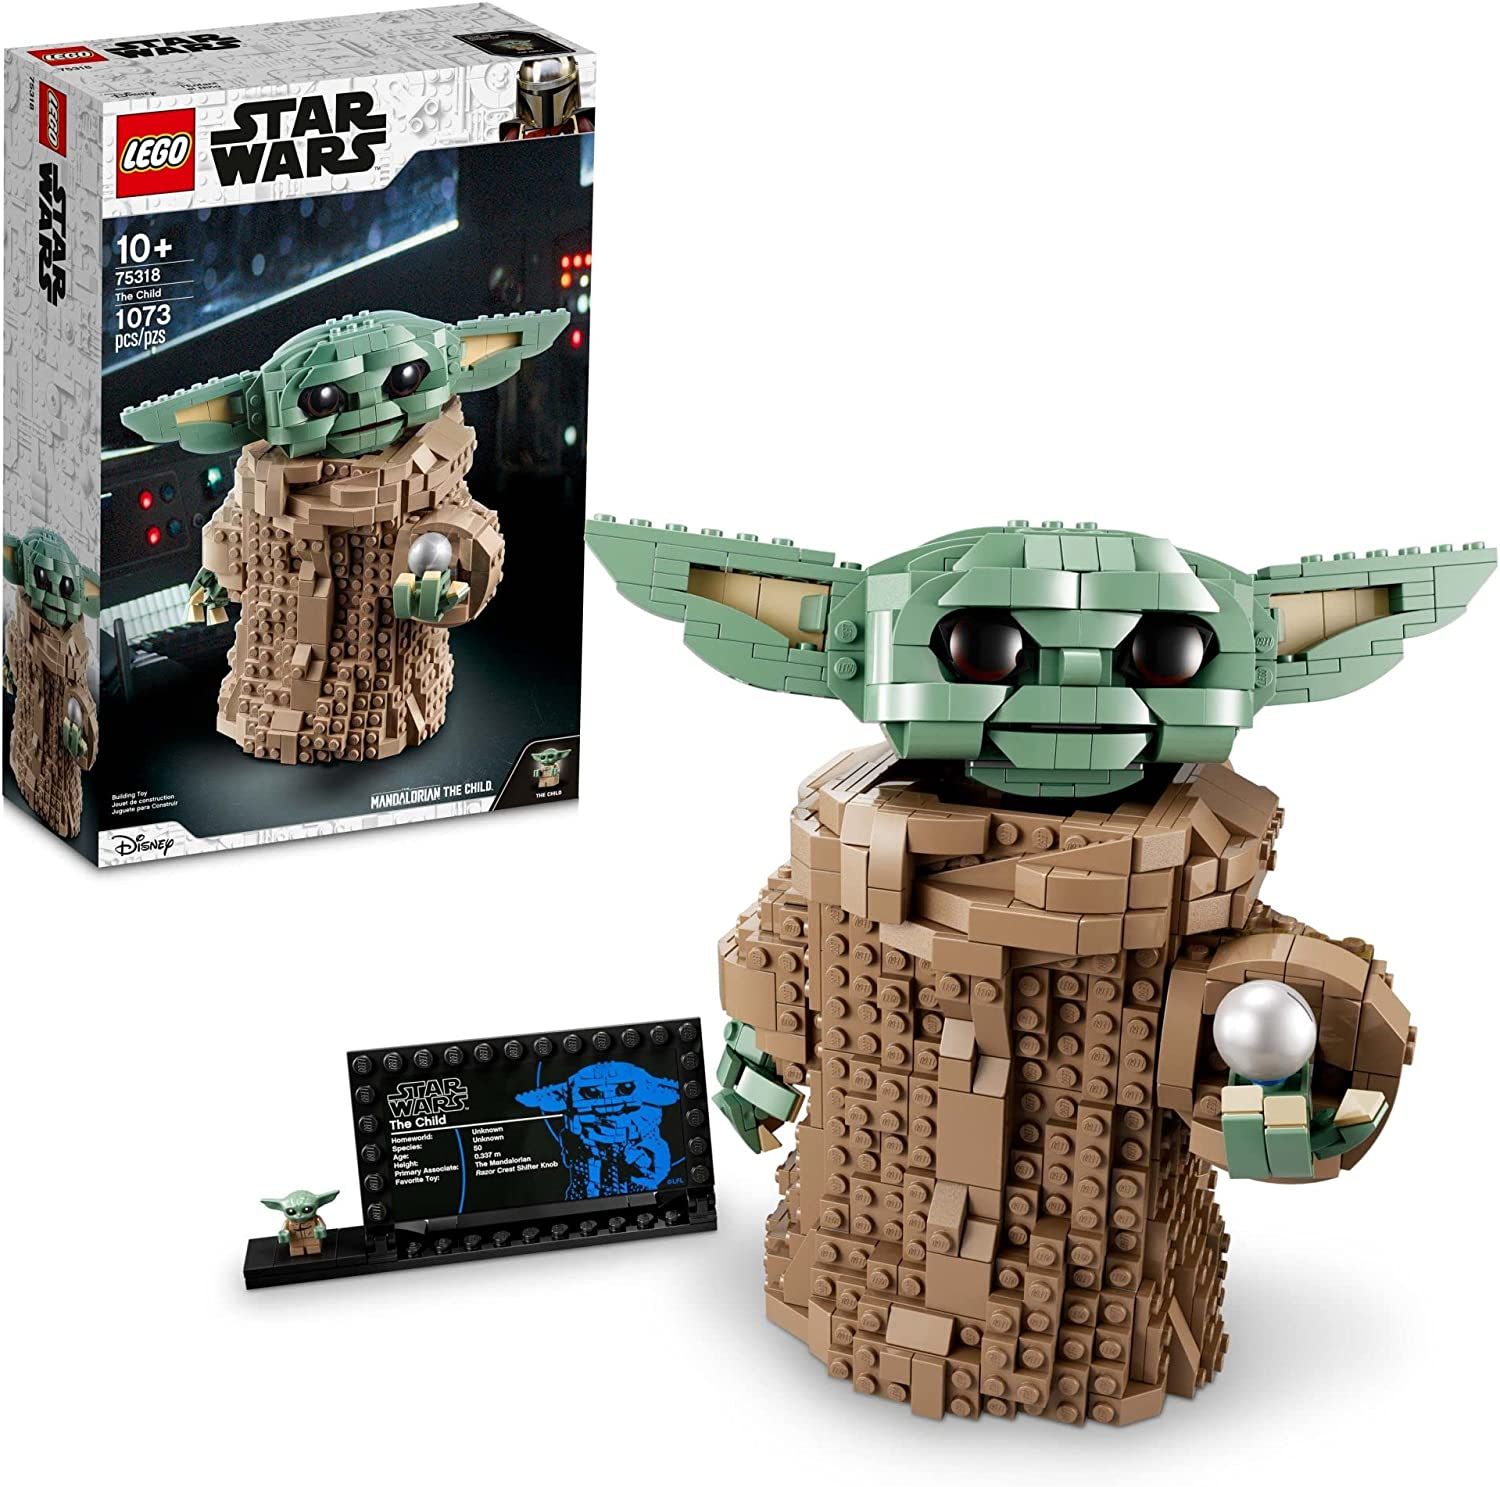 LEGO Star Wars - Anak Grogu